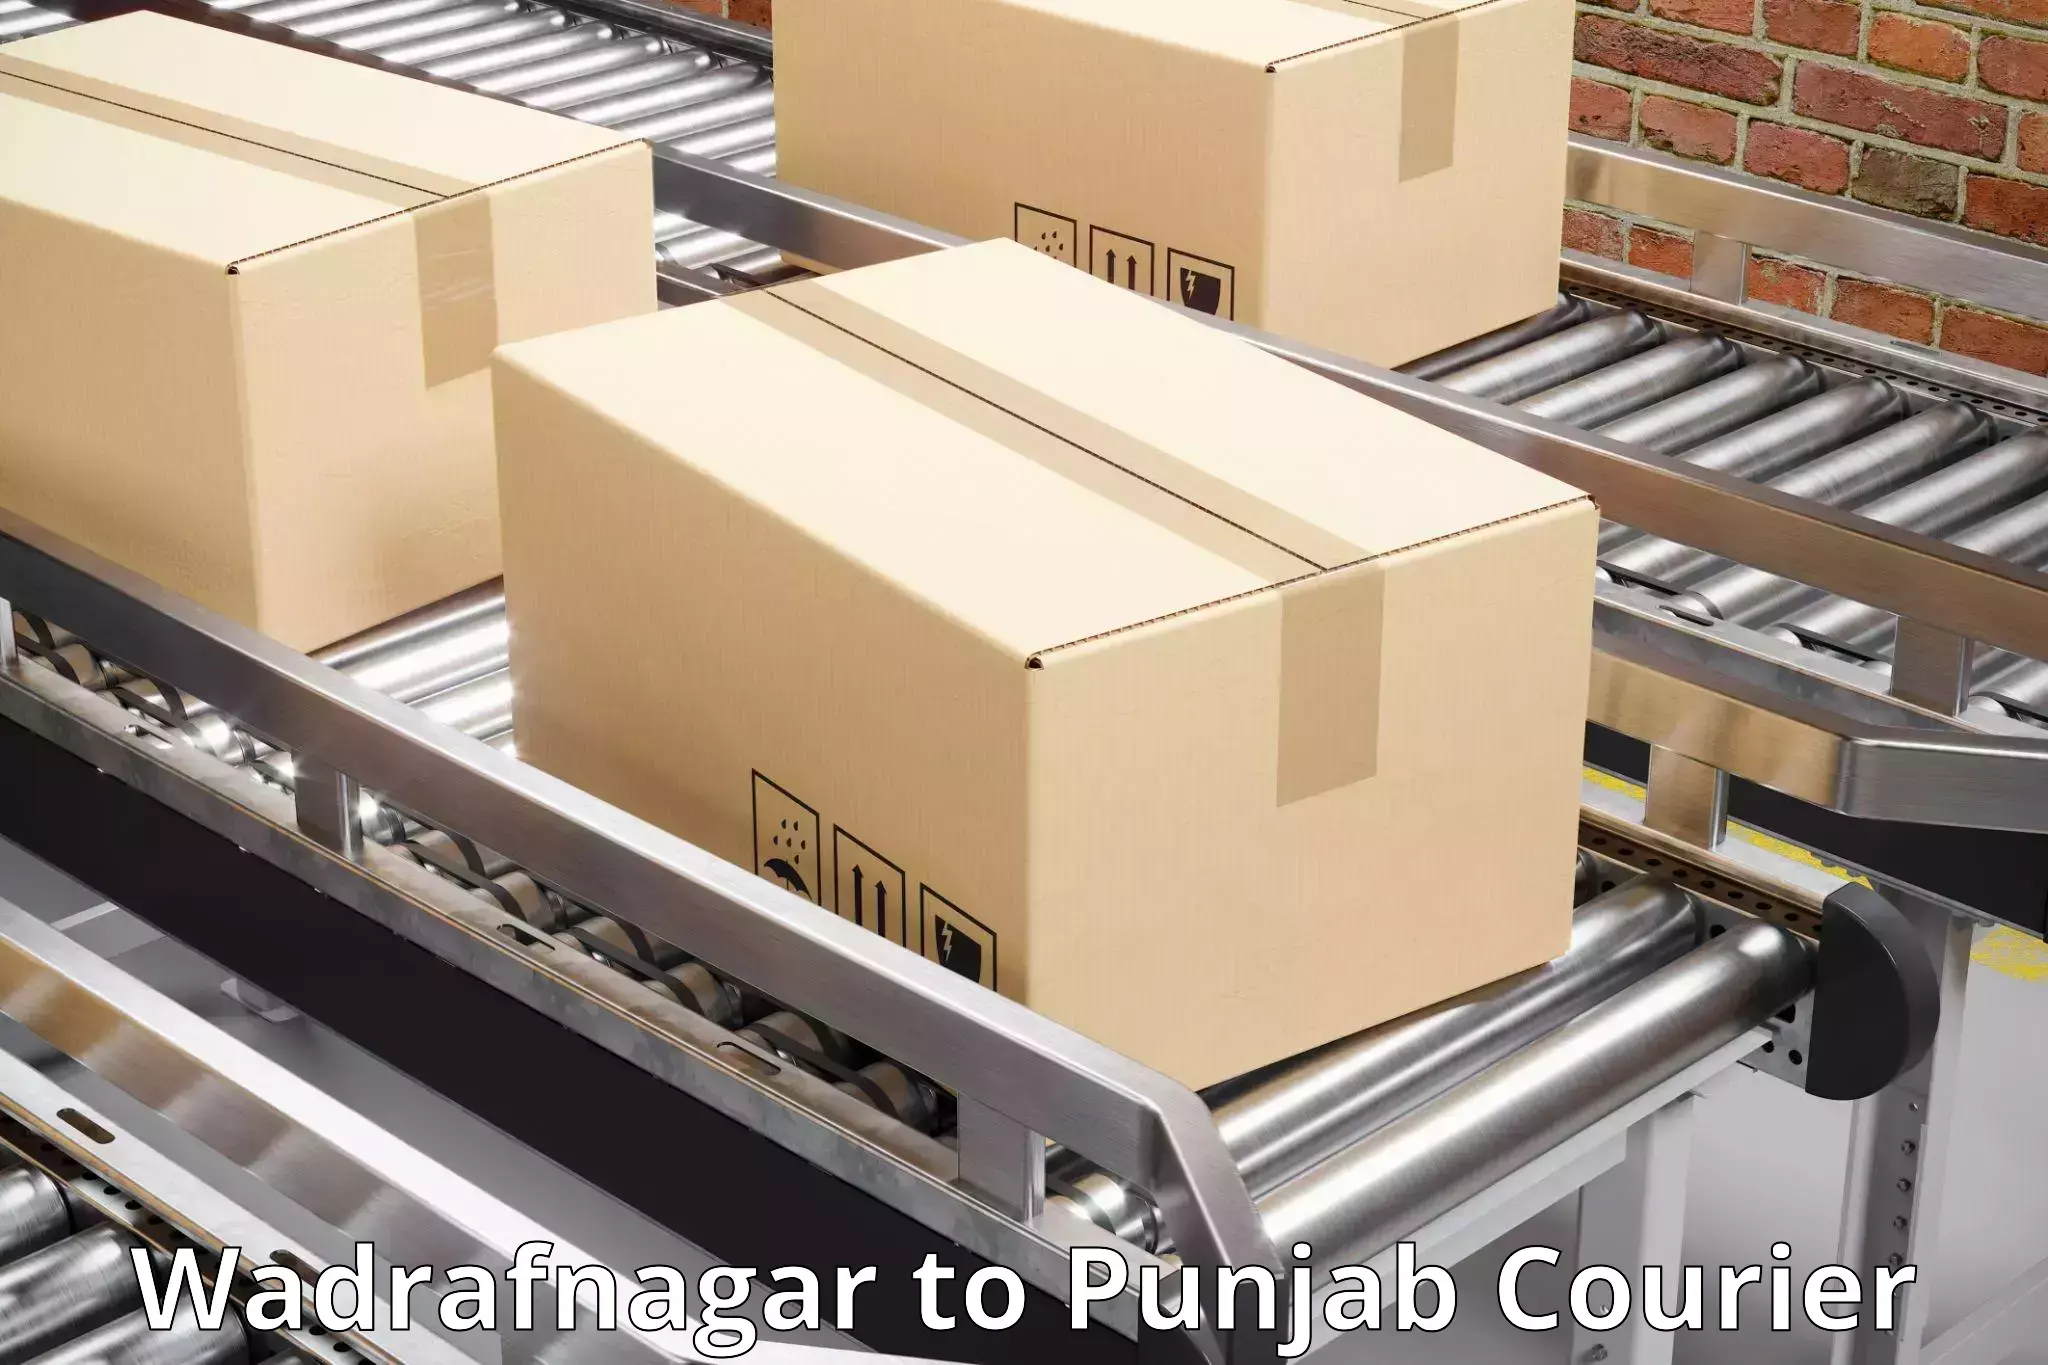 Next-day delivery options Wadrafnagar to Batala